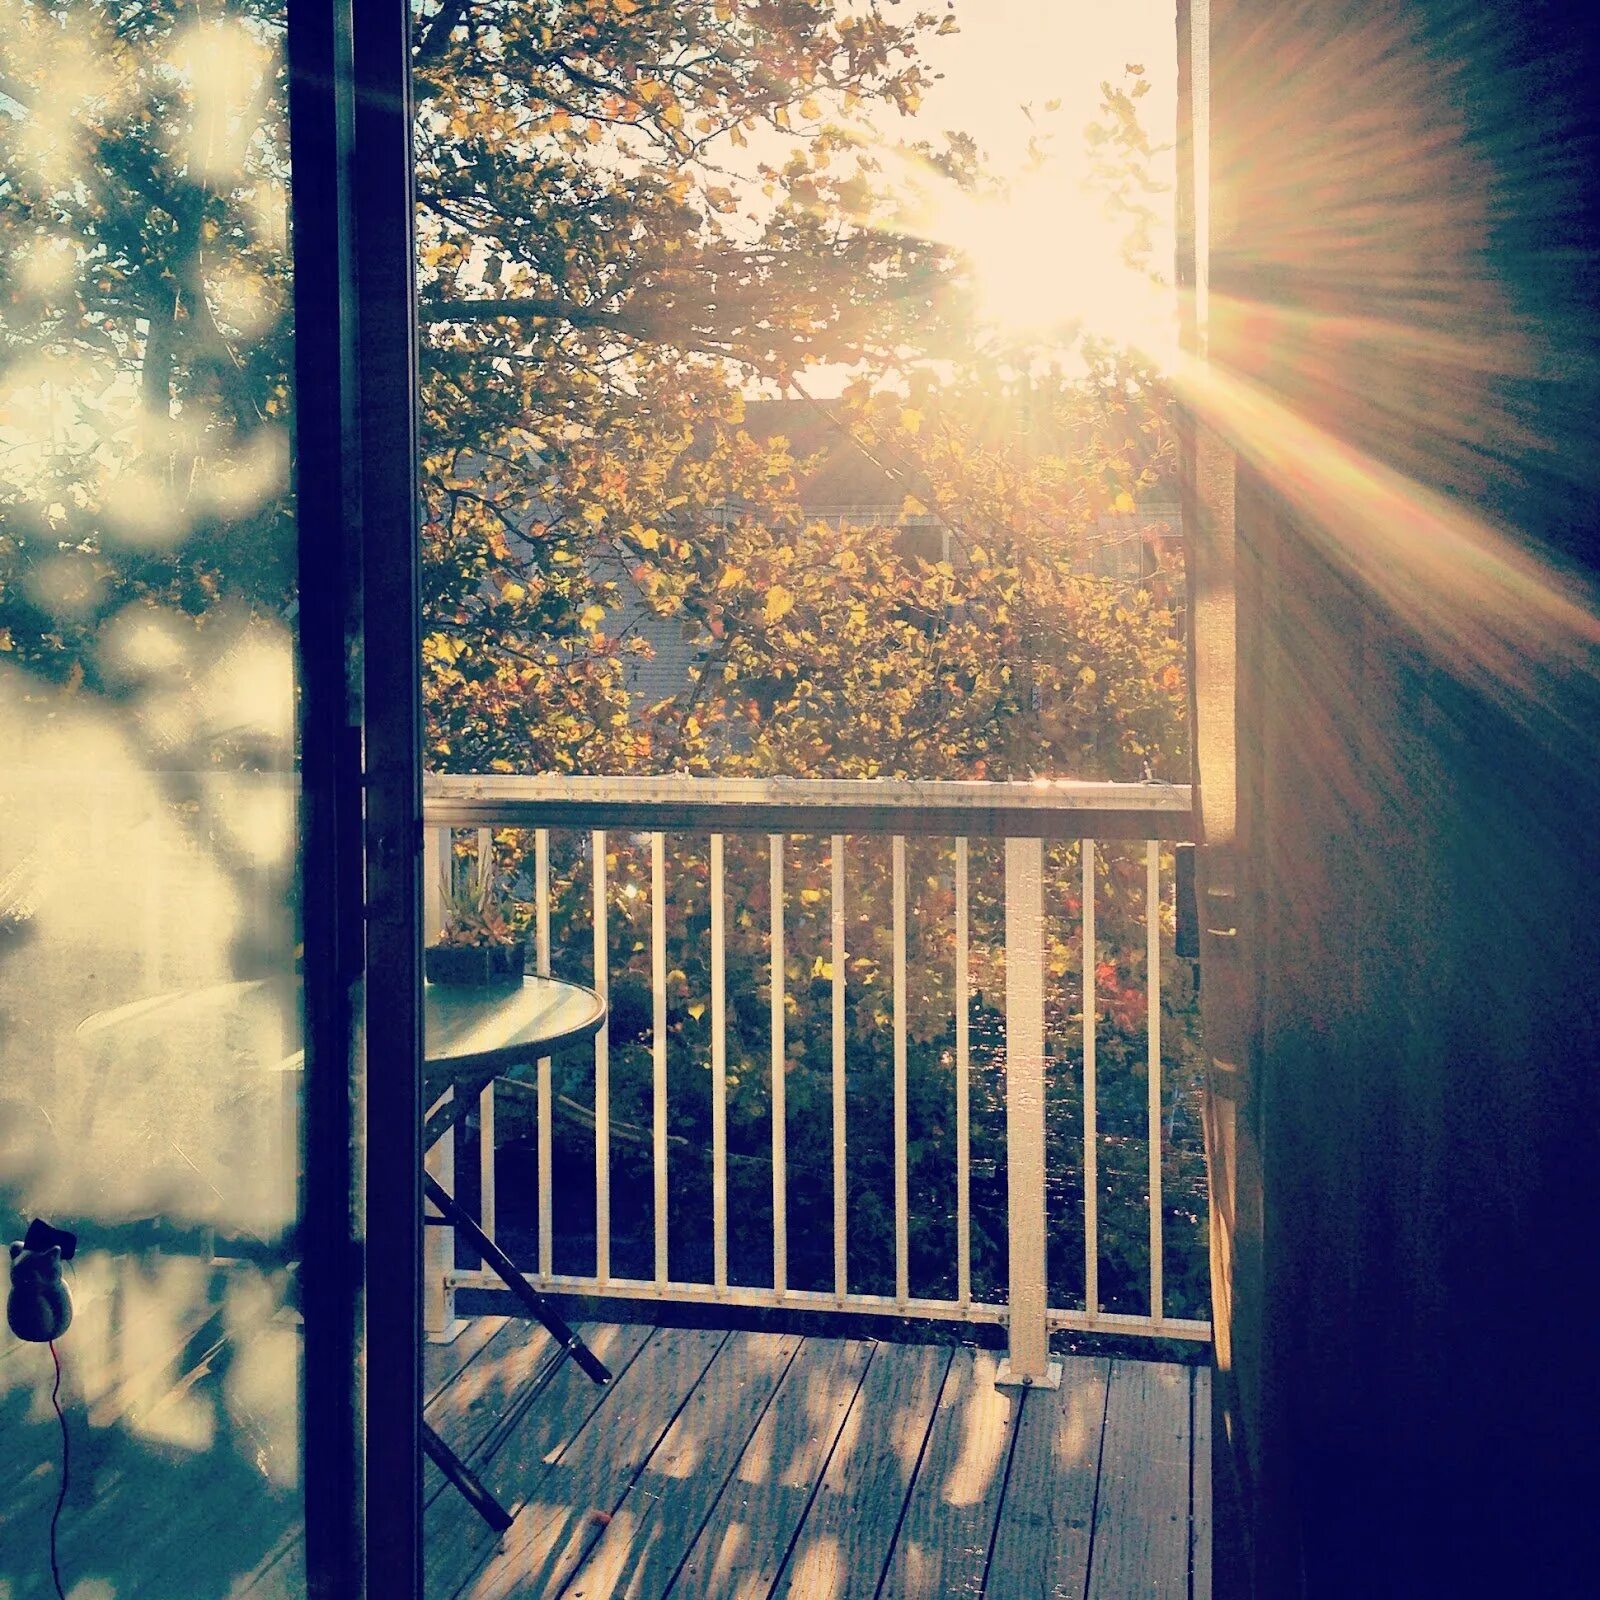 Солнце в окне. Луч солнца в окне. Солнечное утро в окне. Солнечные лучи в окне. Яркое солнце светит в окна домов